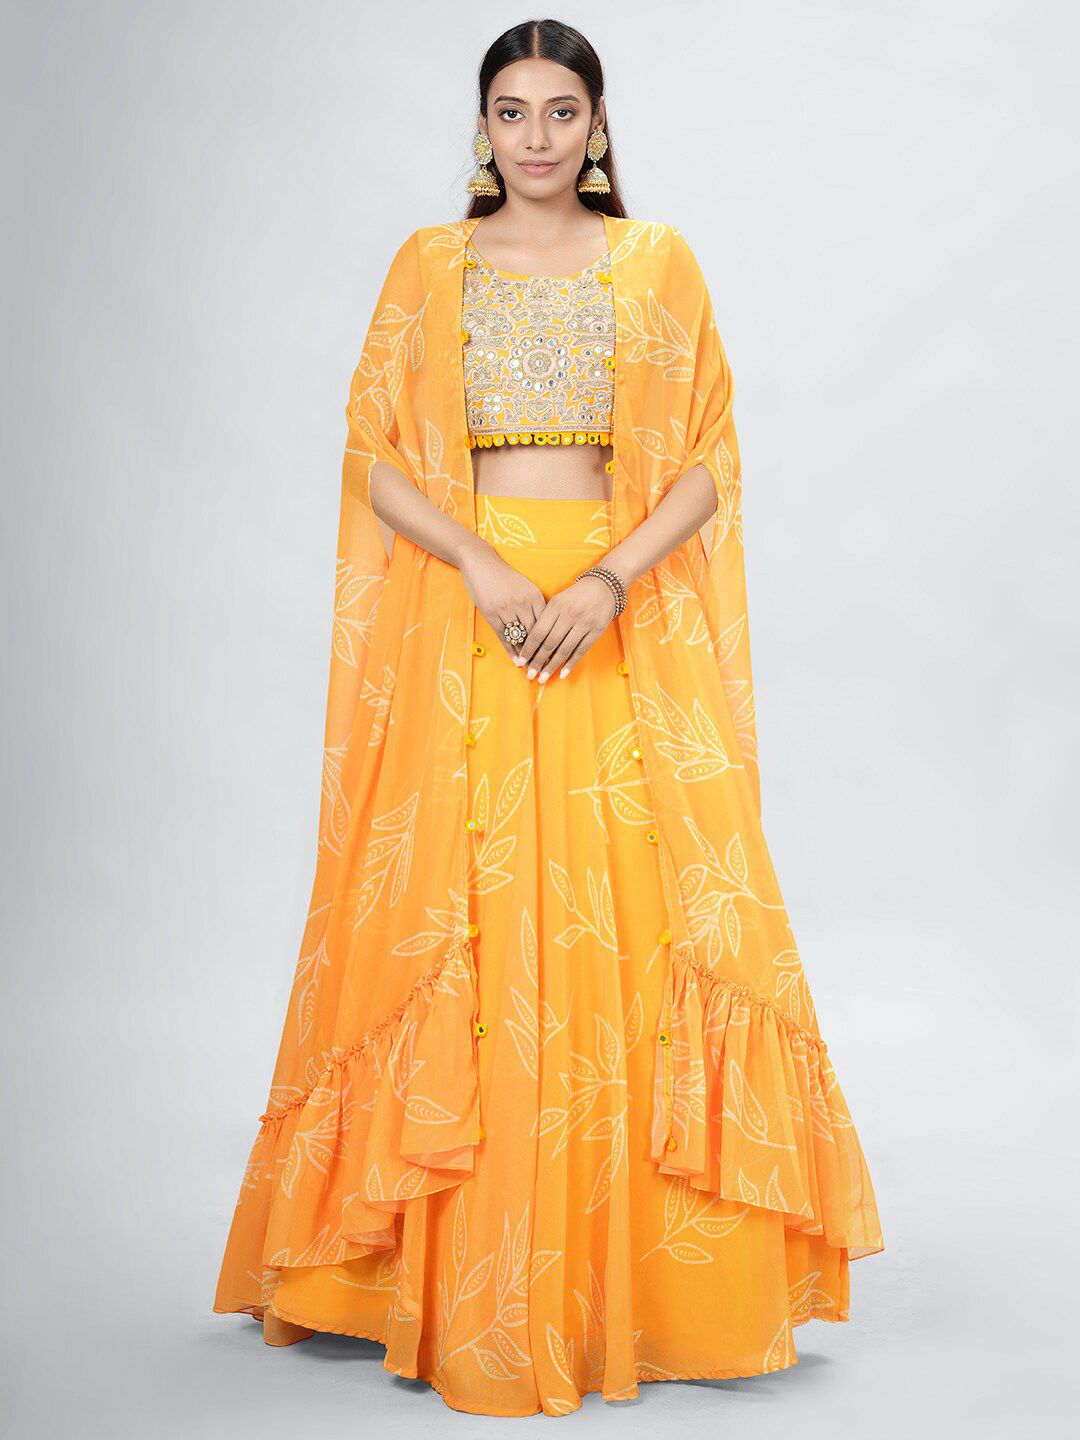 DRESSTIVE Yellow & Cream-Coloured Embroidered Mirror Work Semi-Stitched Lehenga & Unstitched Price in India